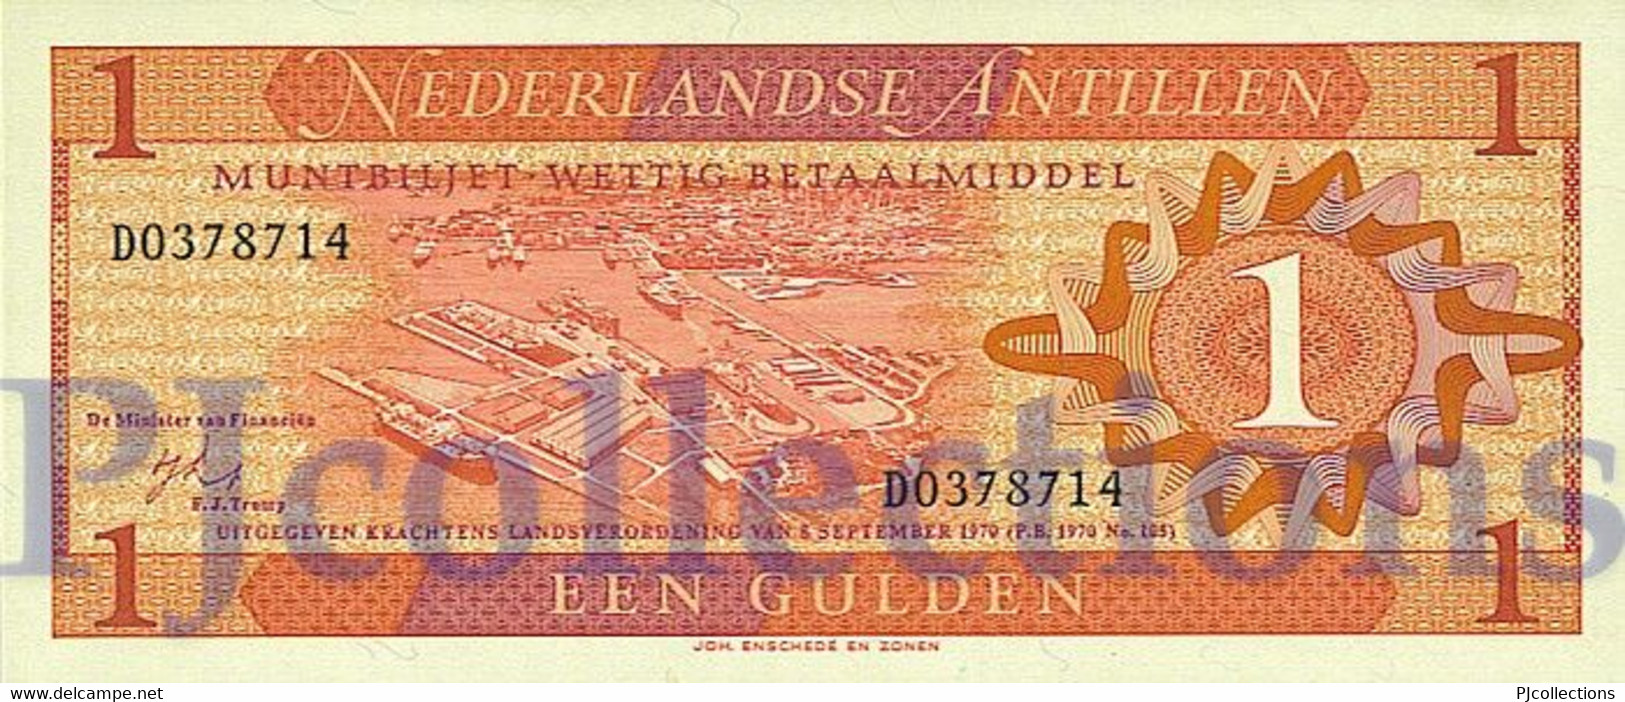 NETHERLANDS ANTILLES 1 GULDEN 1970 PICK 20a UNC - Antilles Néerlandaises (...-1986)